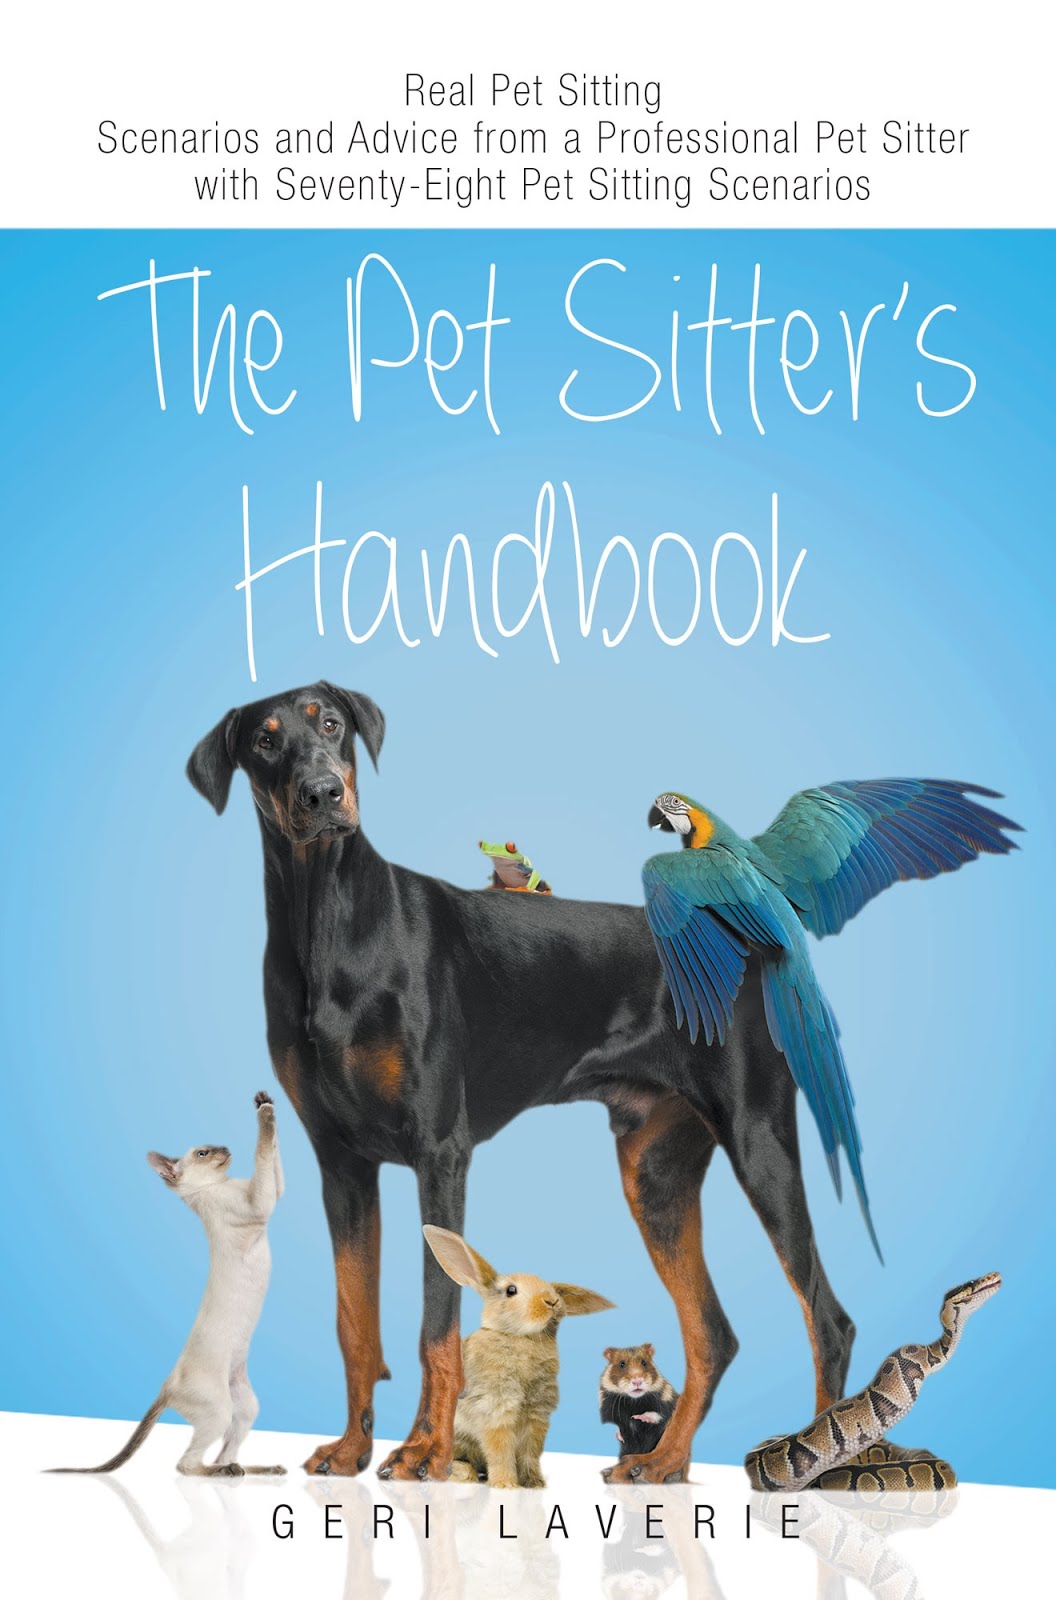 Il Manuale del Pet Sitter